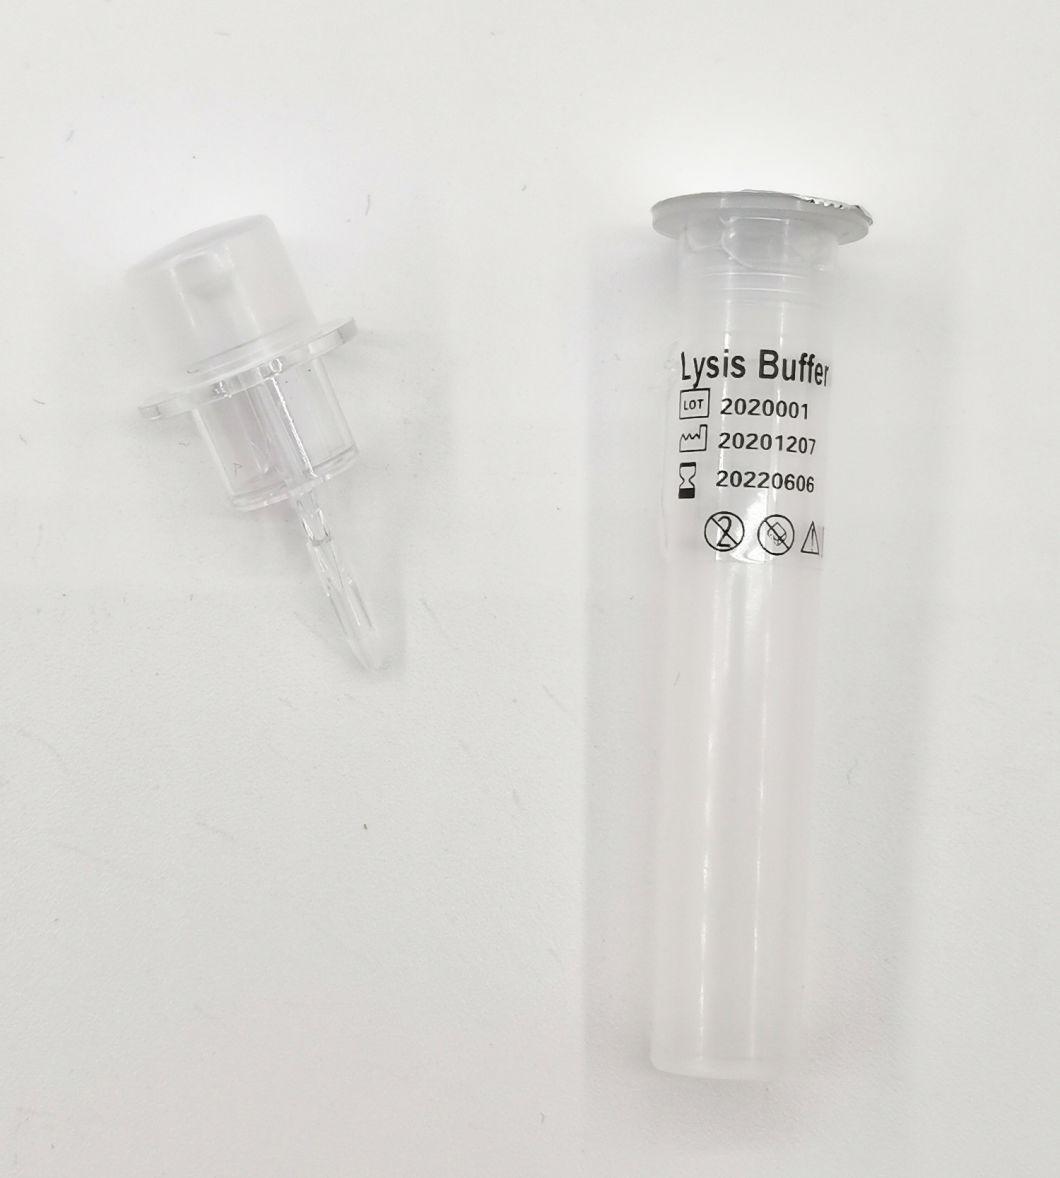 China Top 3 Manufacturer Quest Diagnostics Home Kit Test Rapid Antigen Test